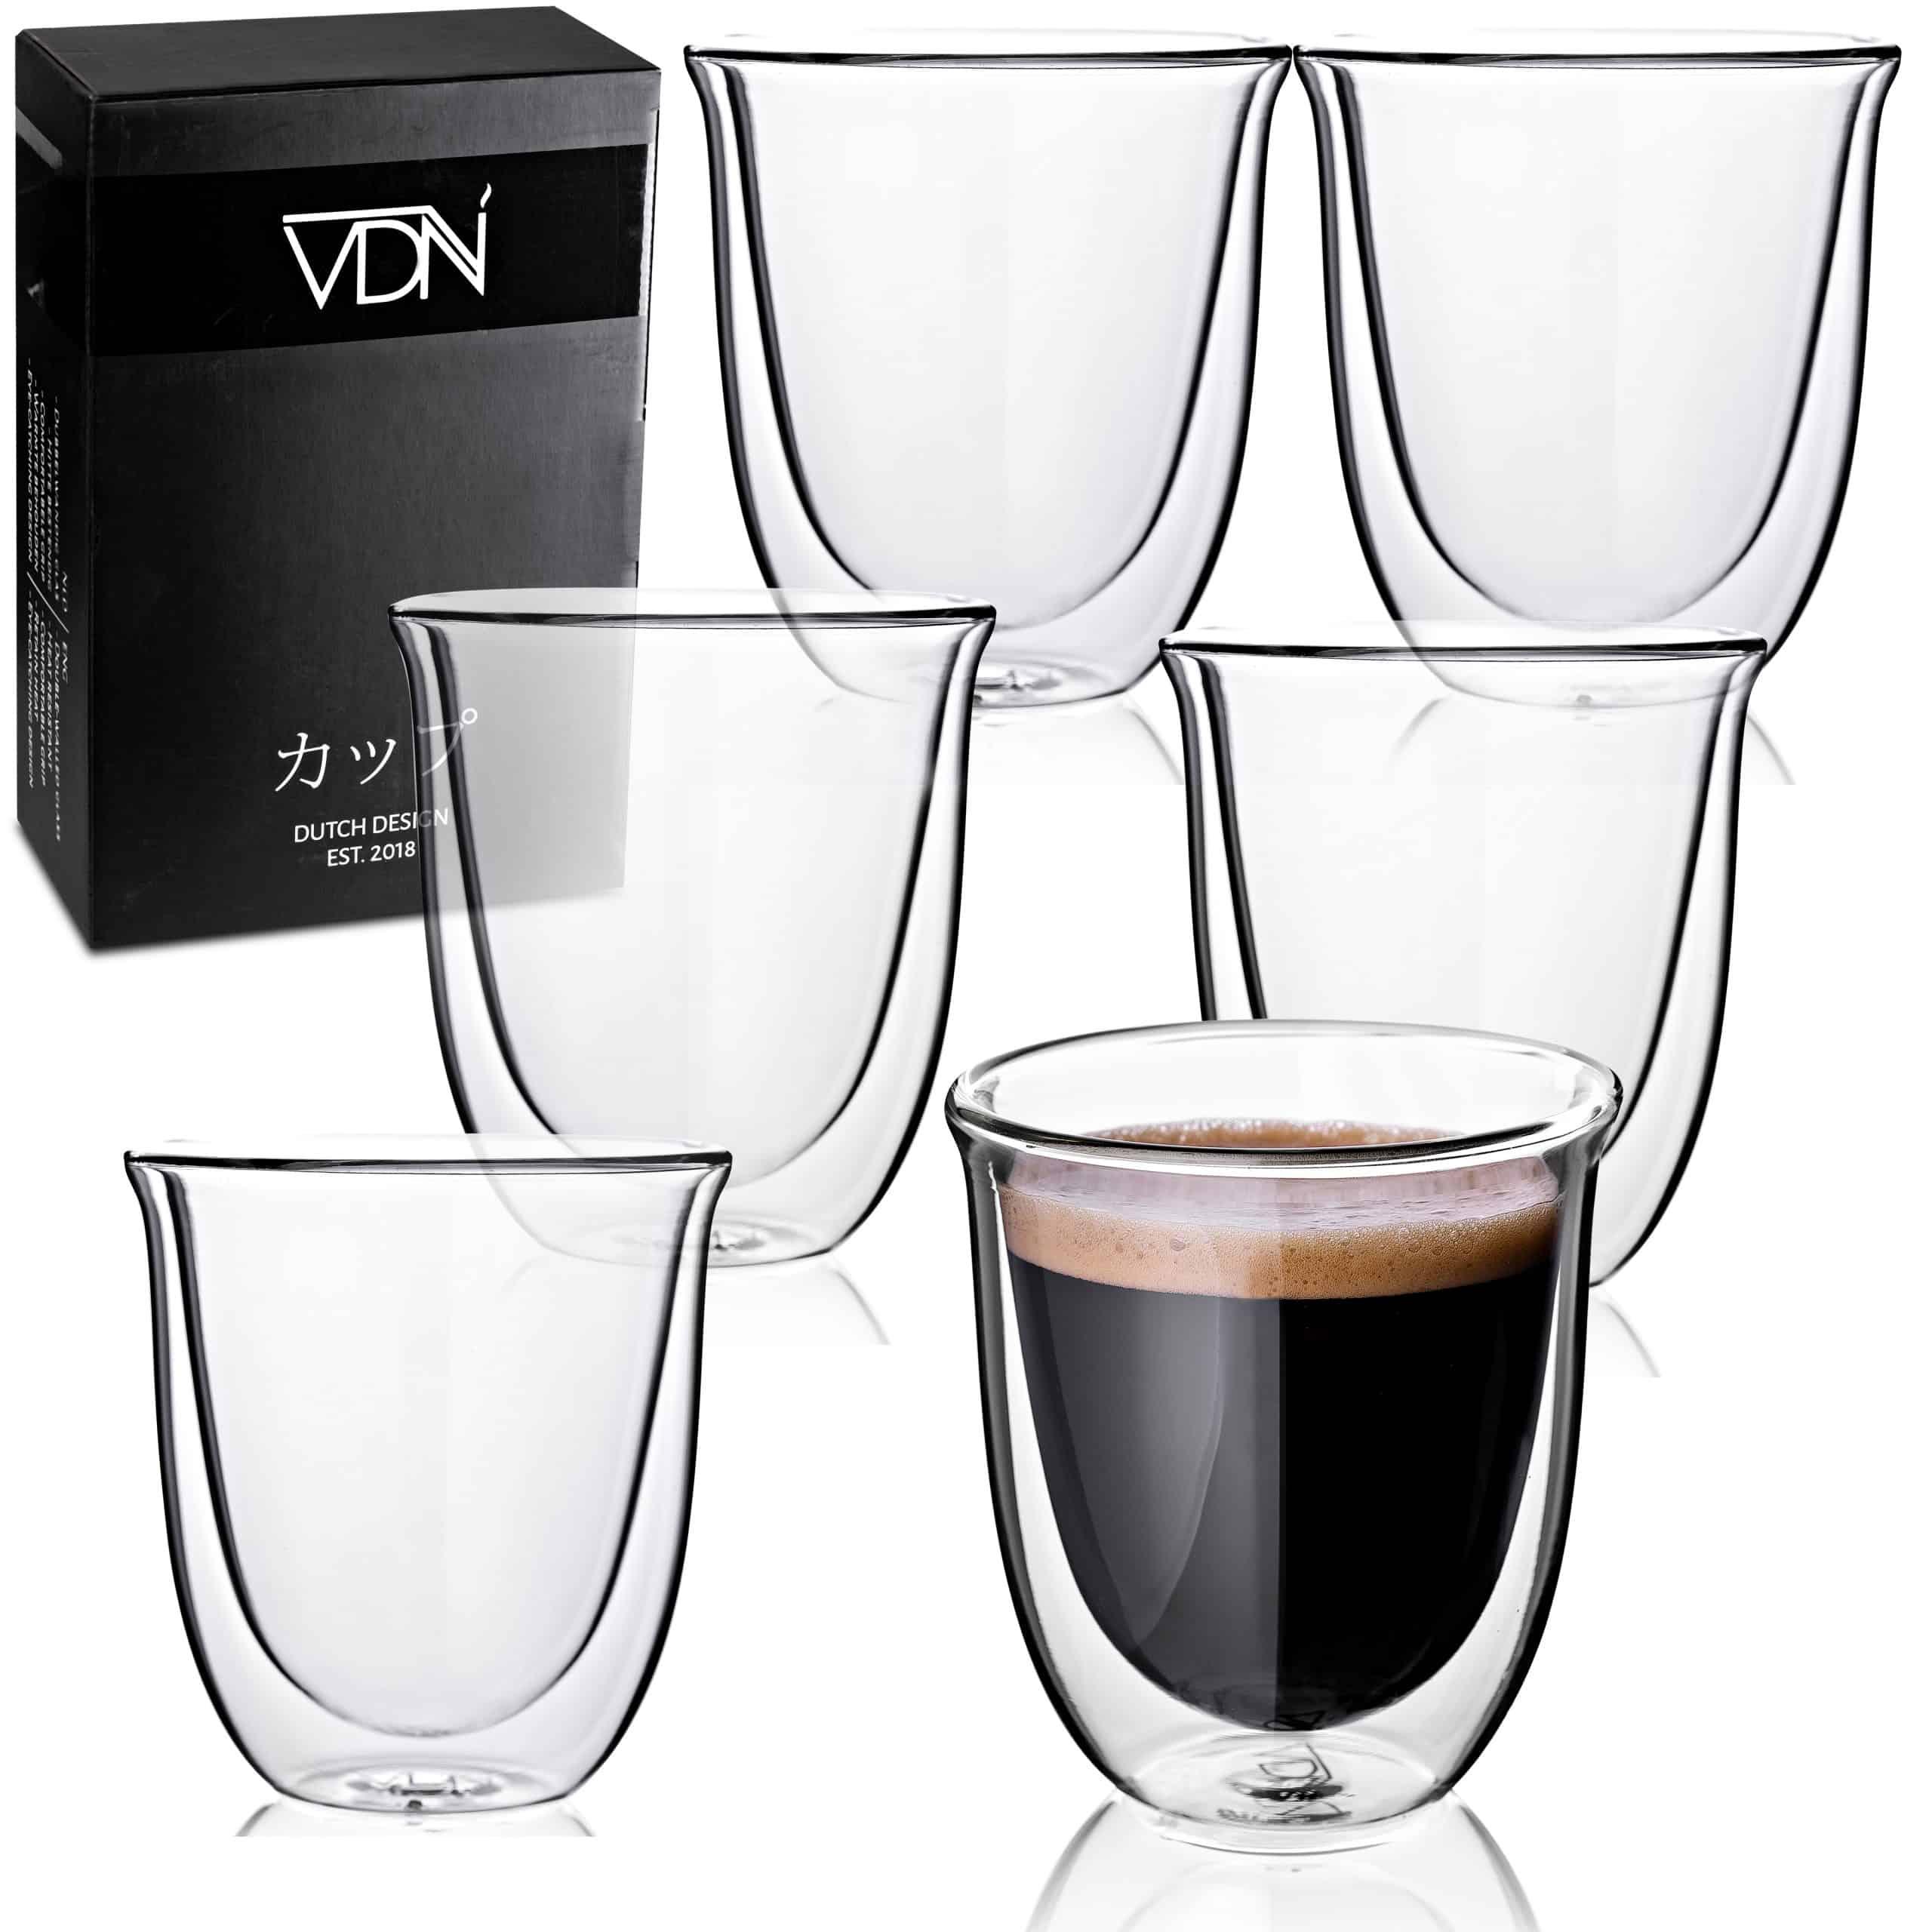 besteden nul Jabeth Wilson Dubbelwandige glazen koffie - 250 ML - Set van 6 - VDN